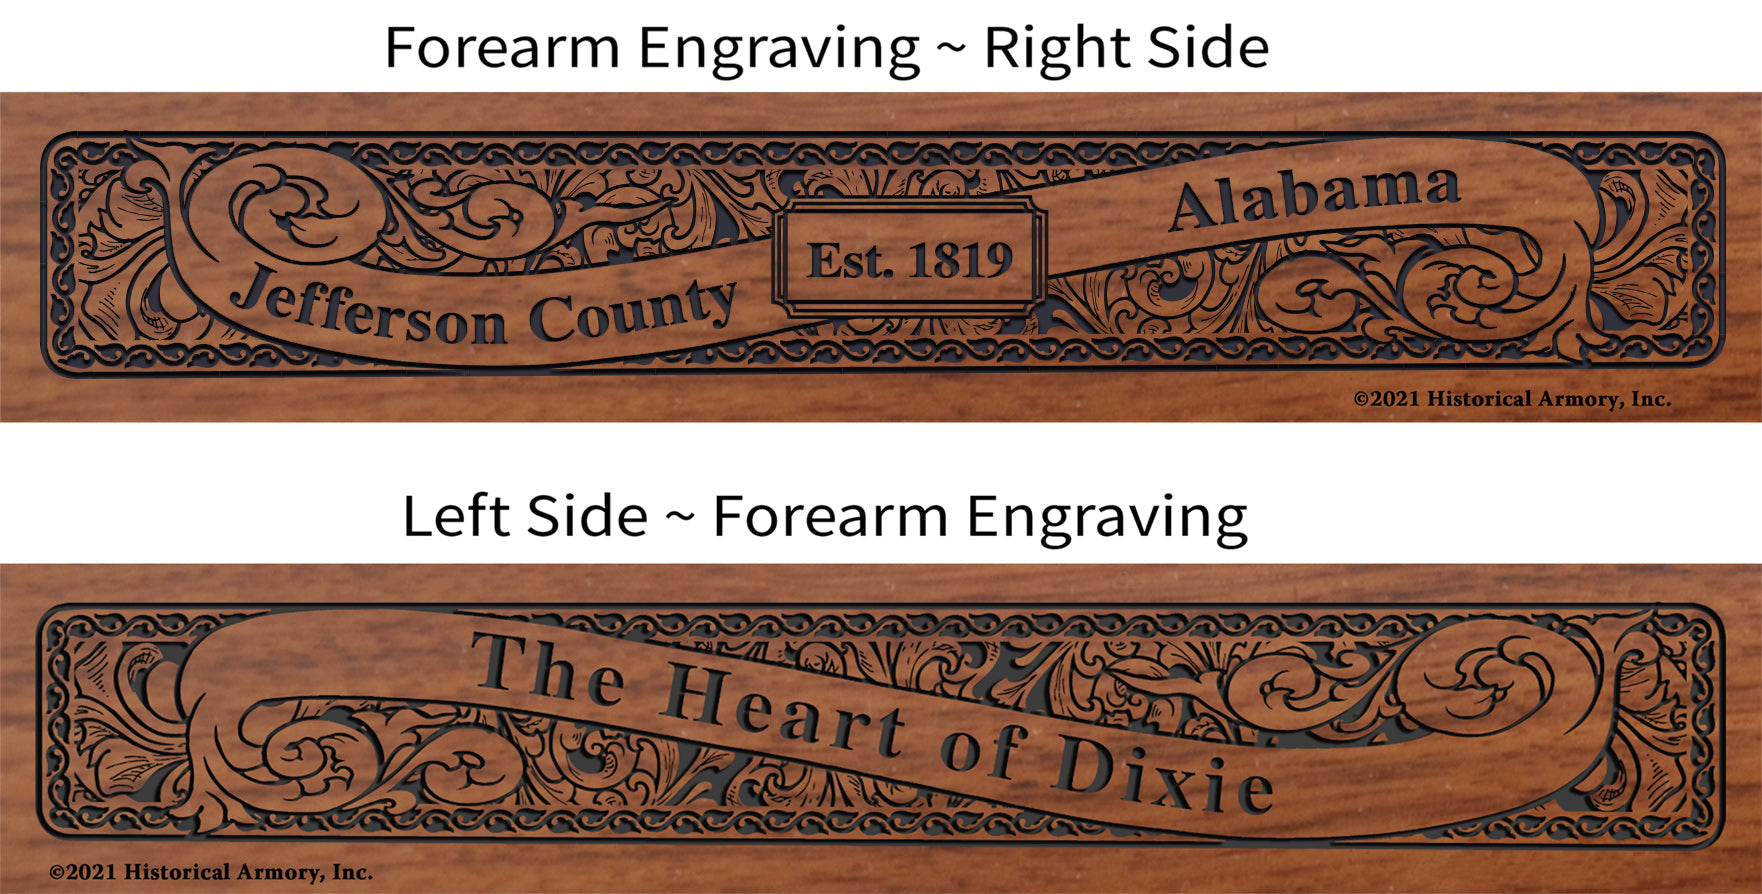 Jefferson County Alabama Establishment and Motto History Engraved Rifle Forearm